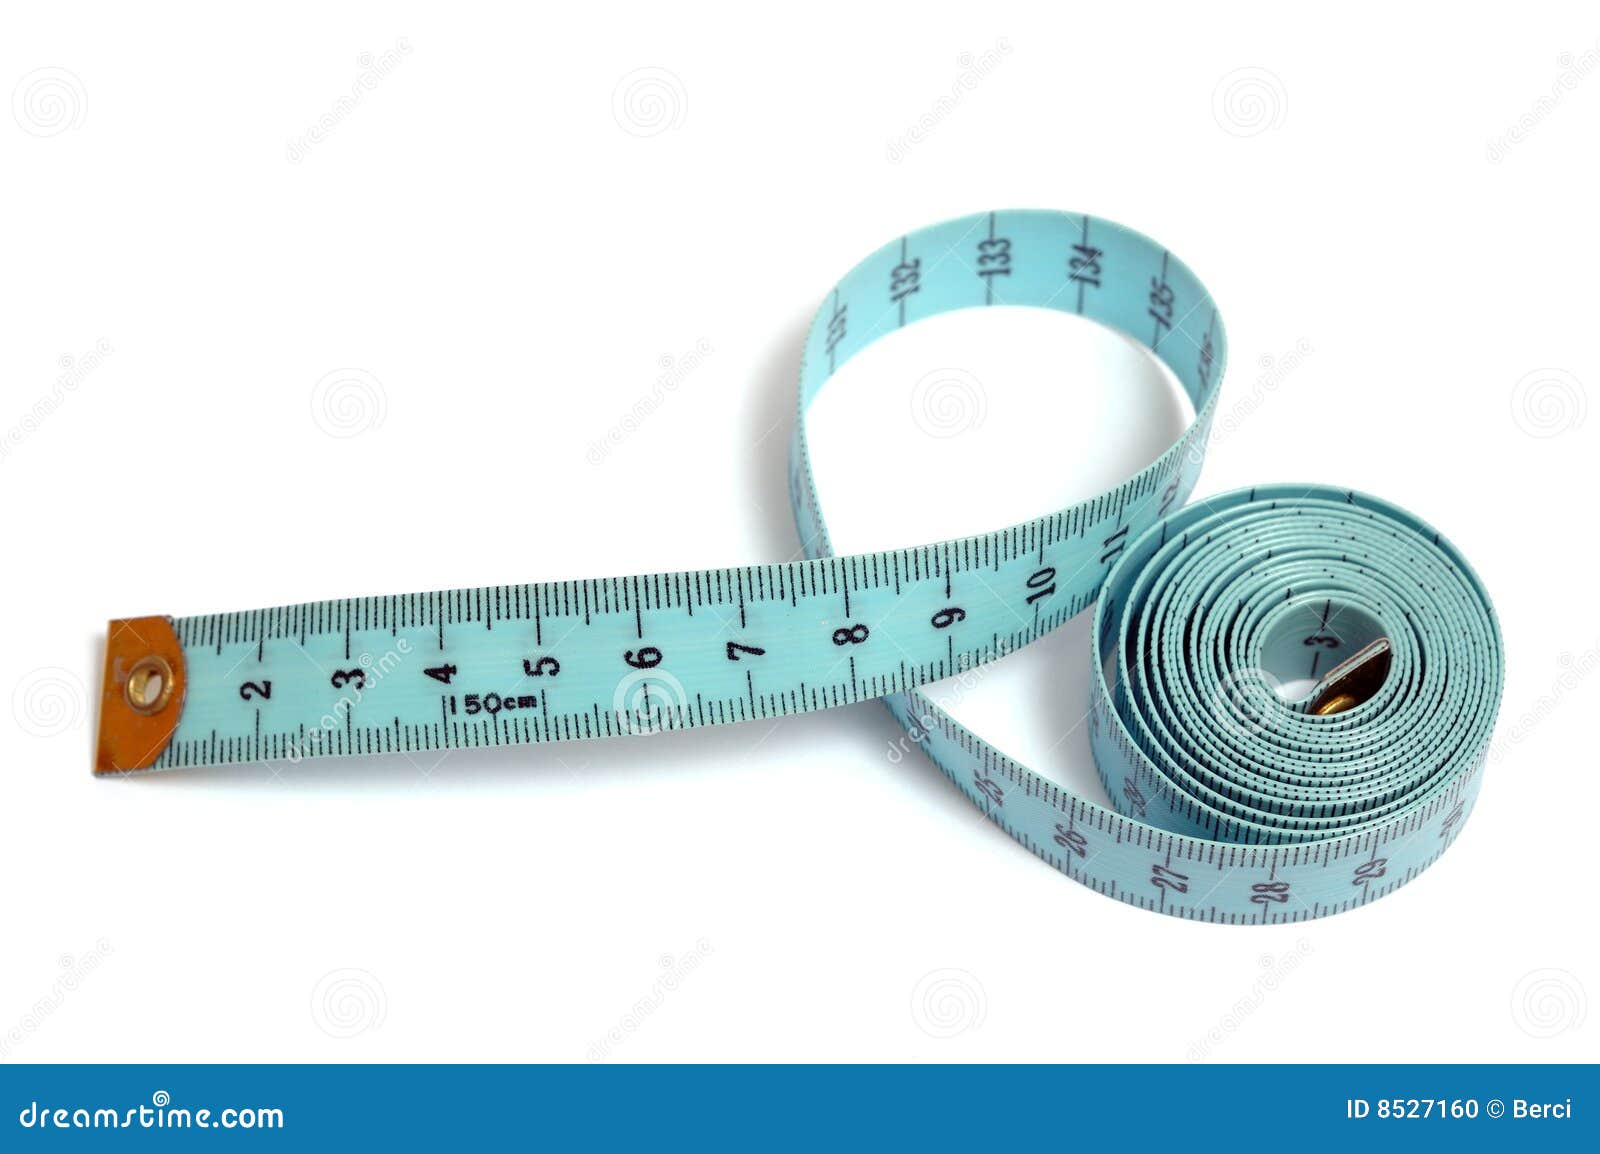 Fabric measuring tape stock photo. Image of seamstress - 32819788